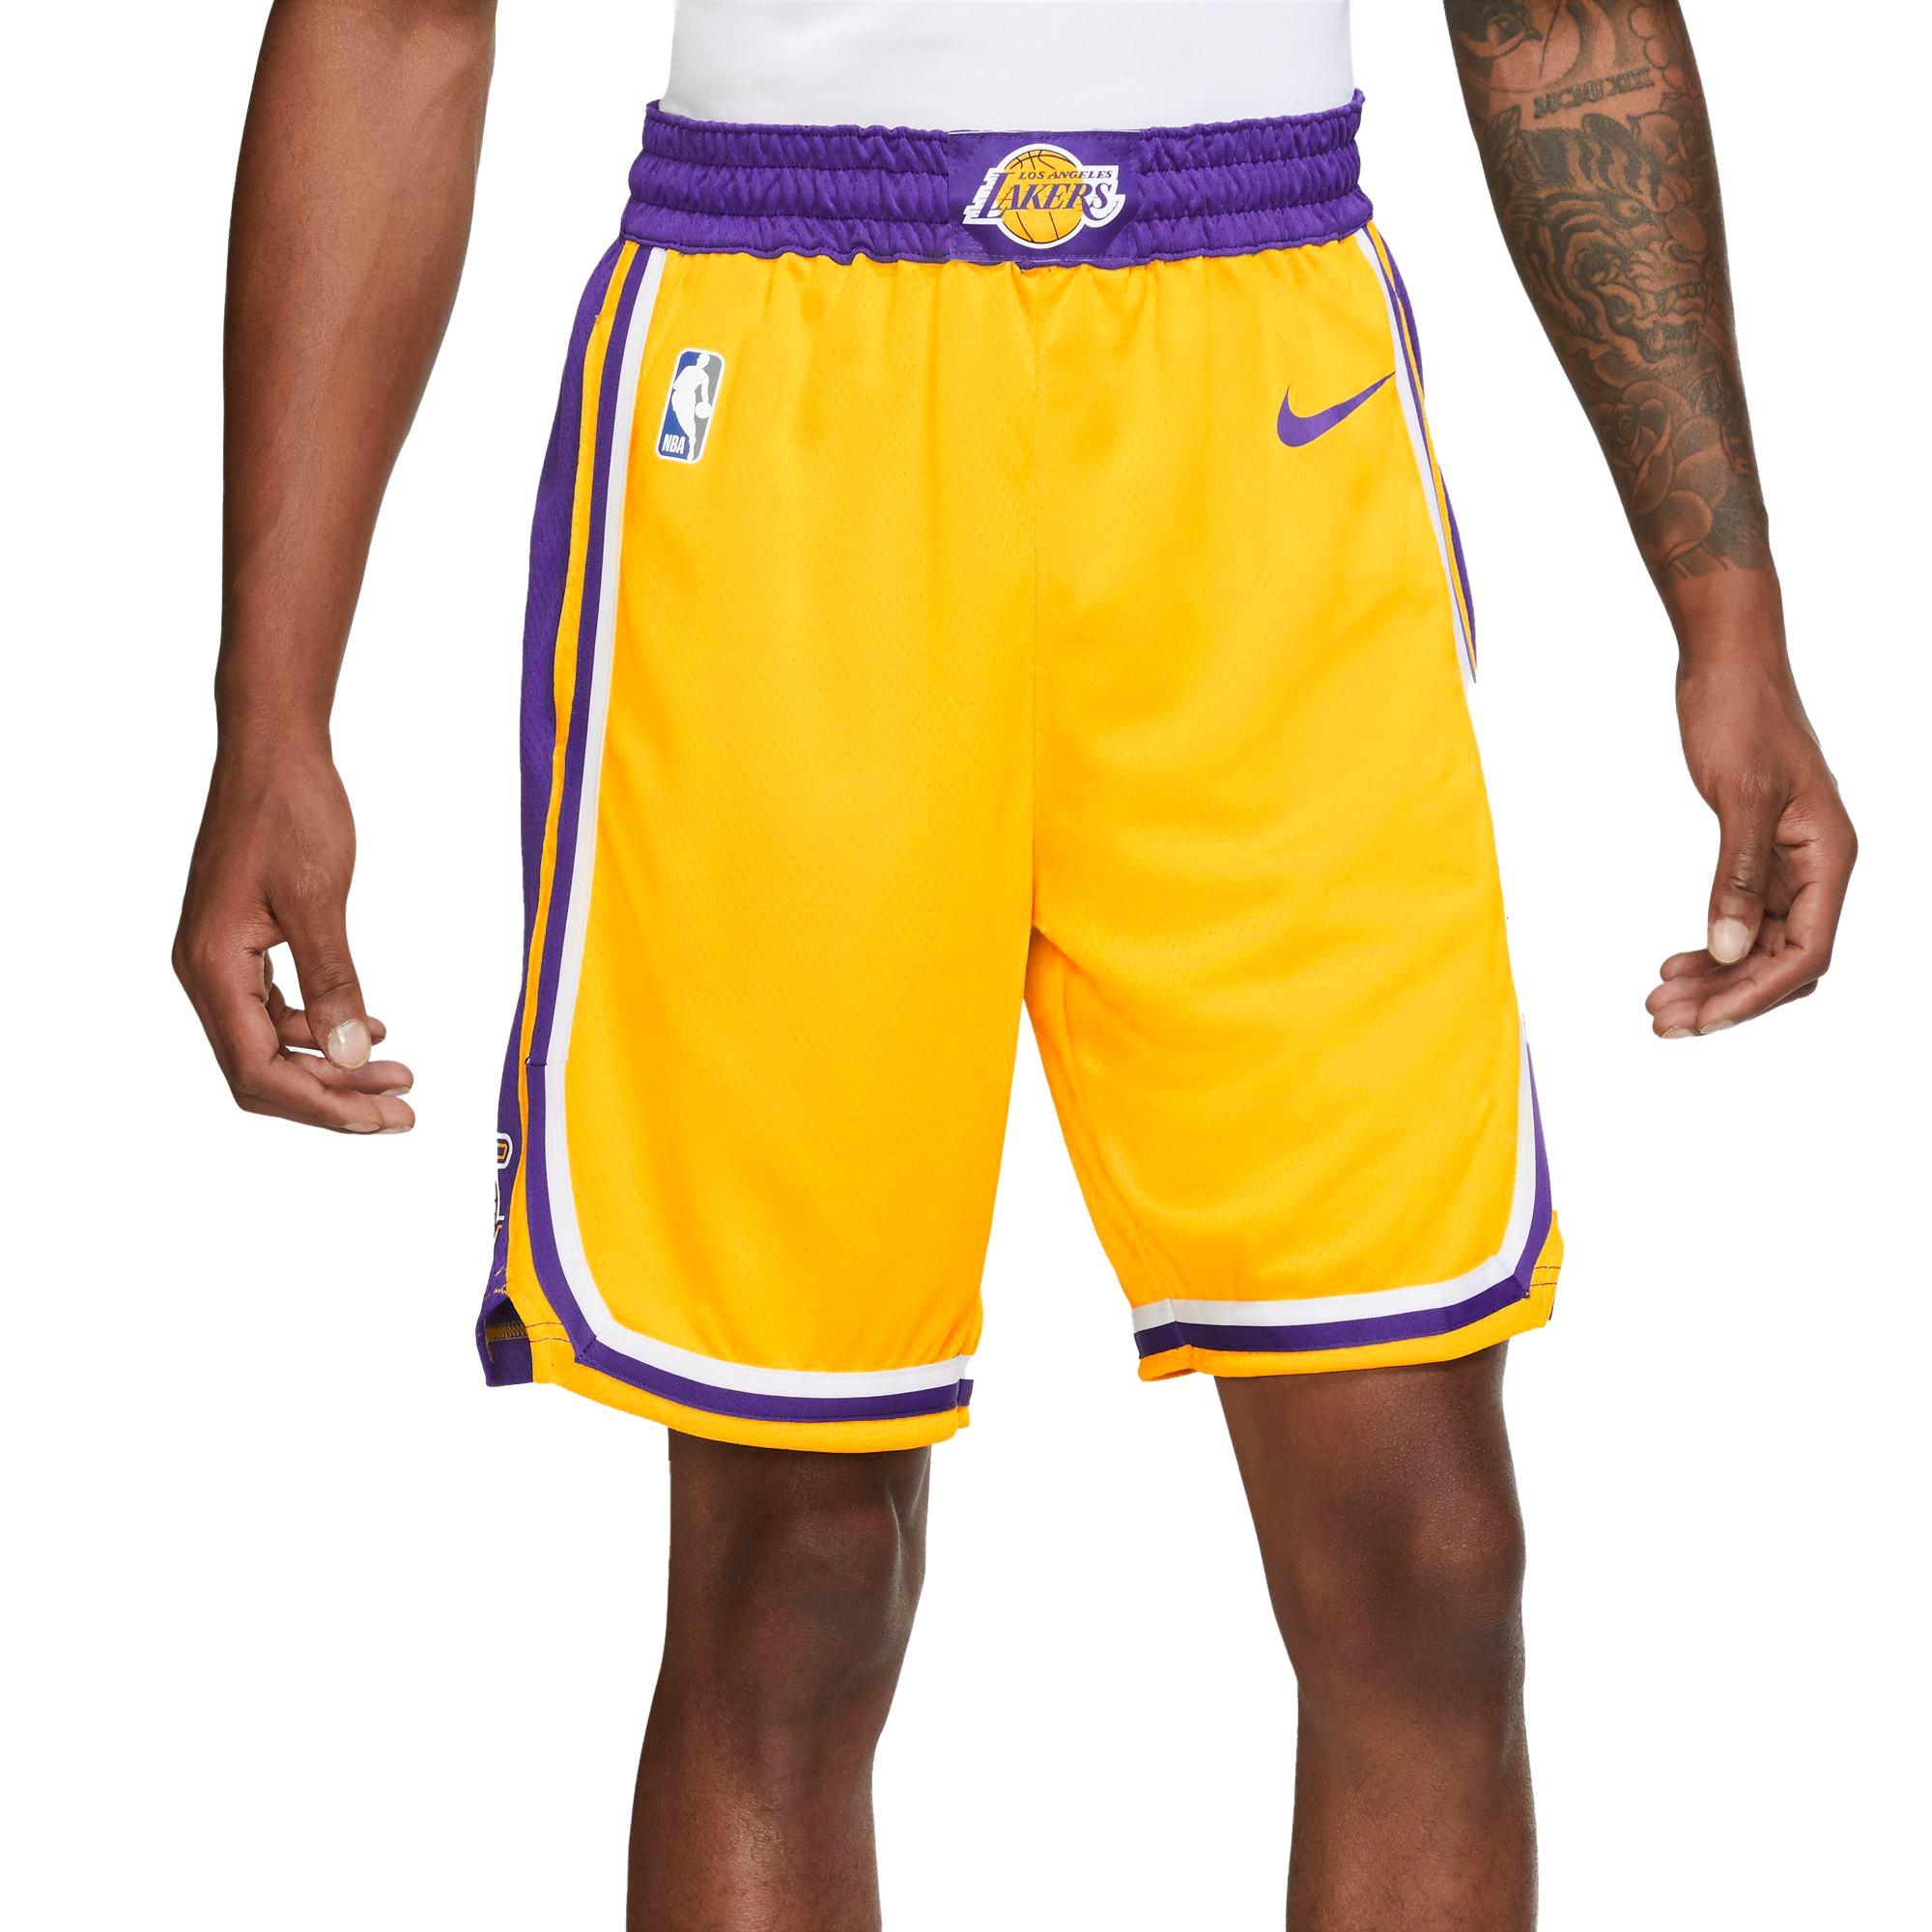 MOMQmicl Men's NBA Lakers Shorts Basketball High Elasticity